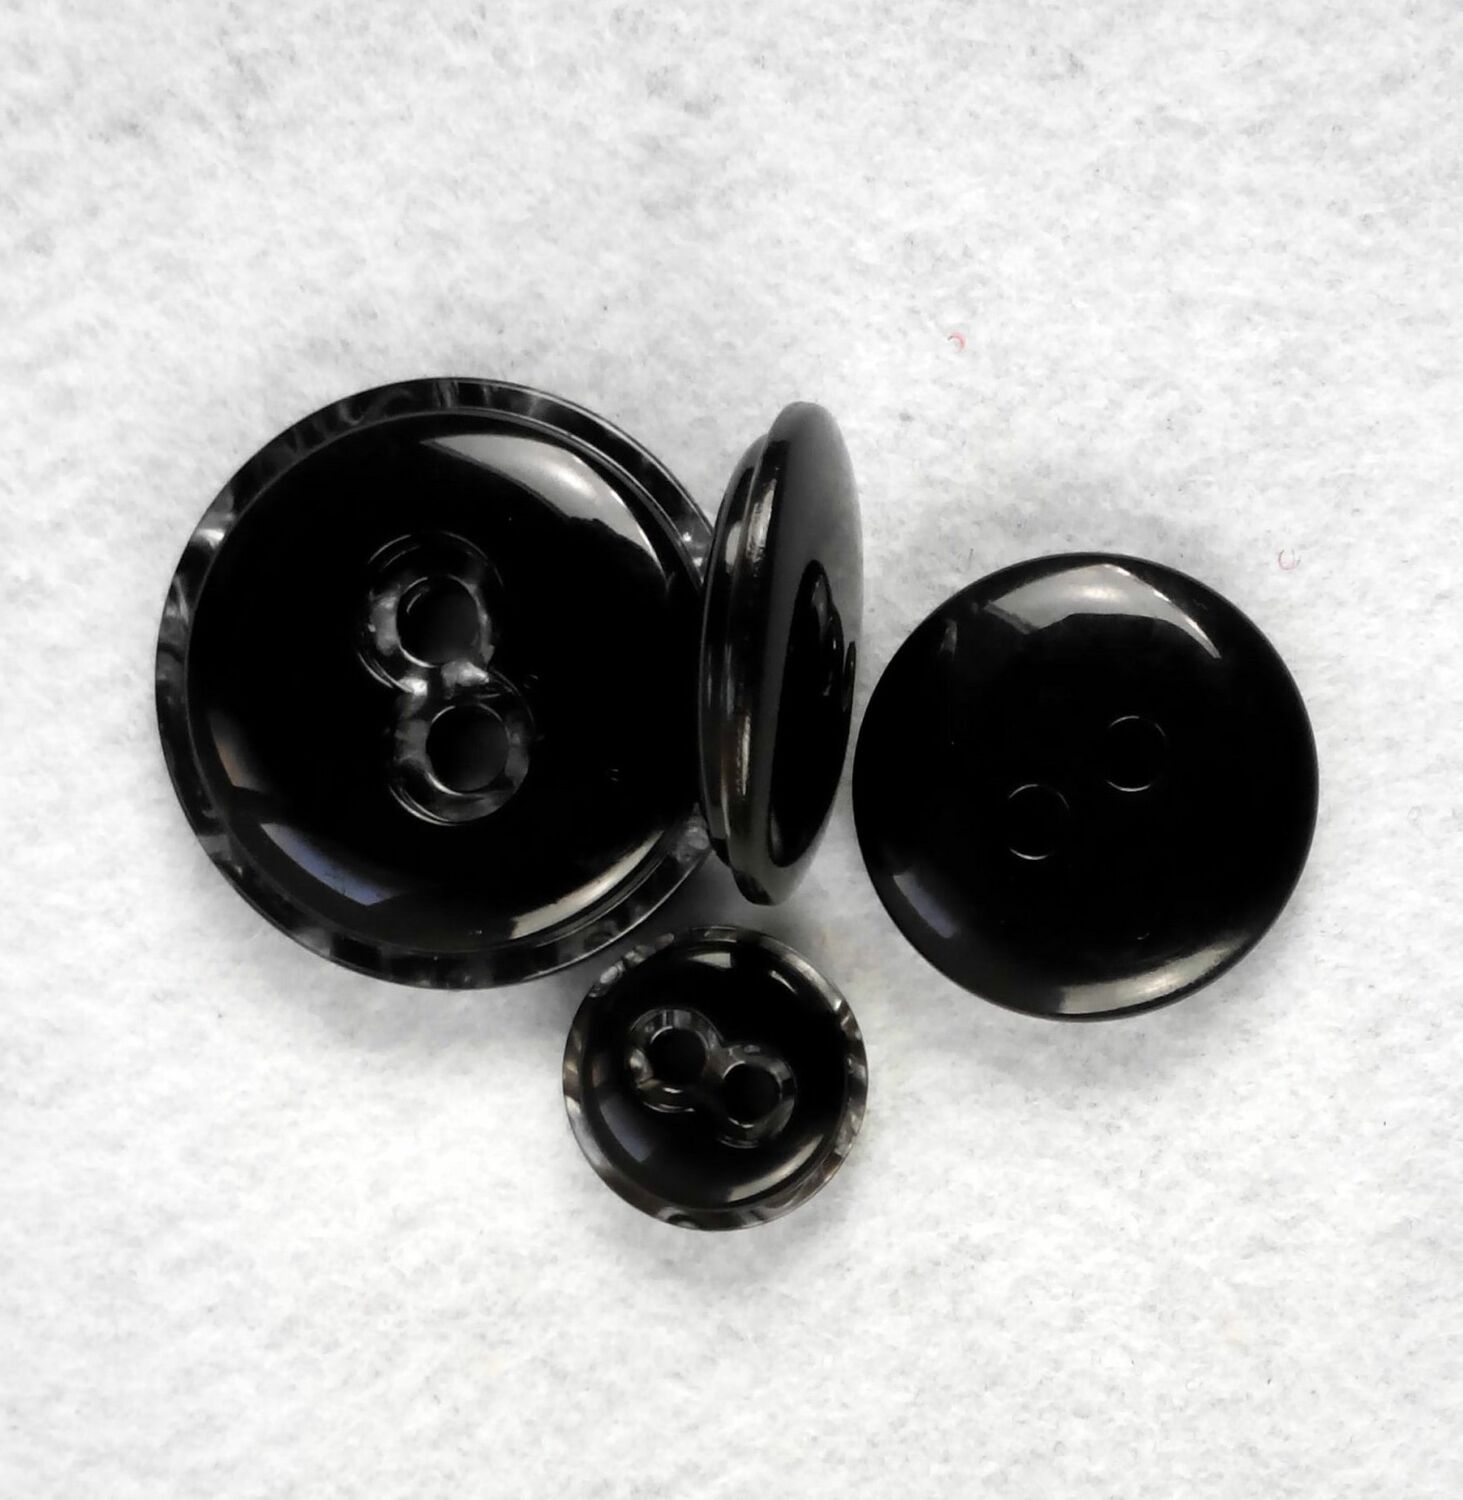 Bellissimo bottone in resina a due componenti